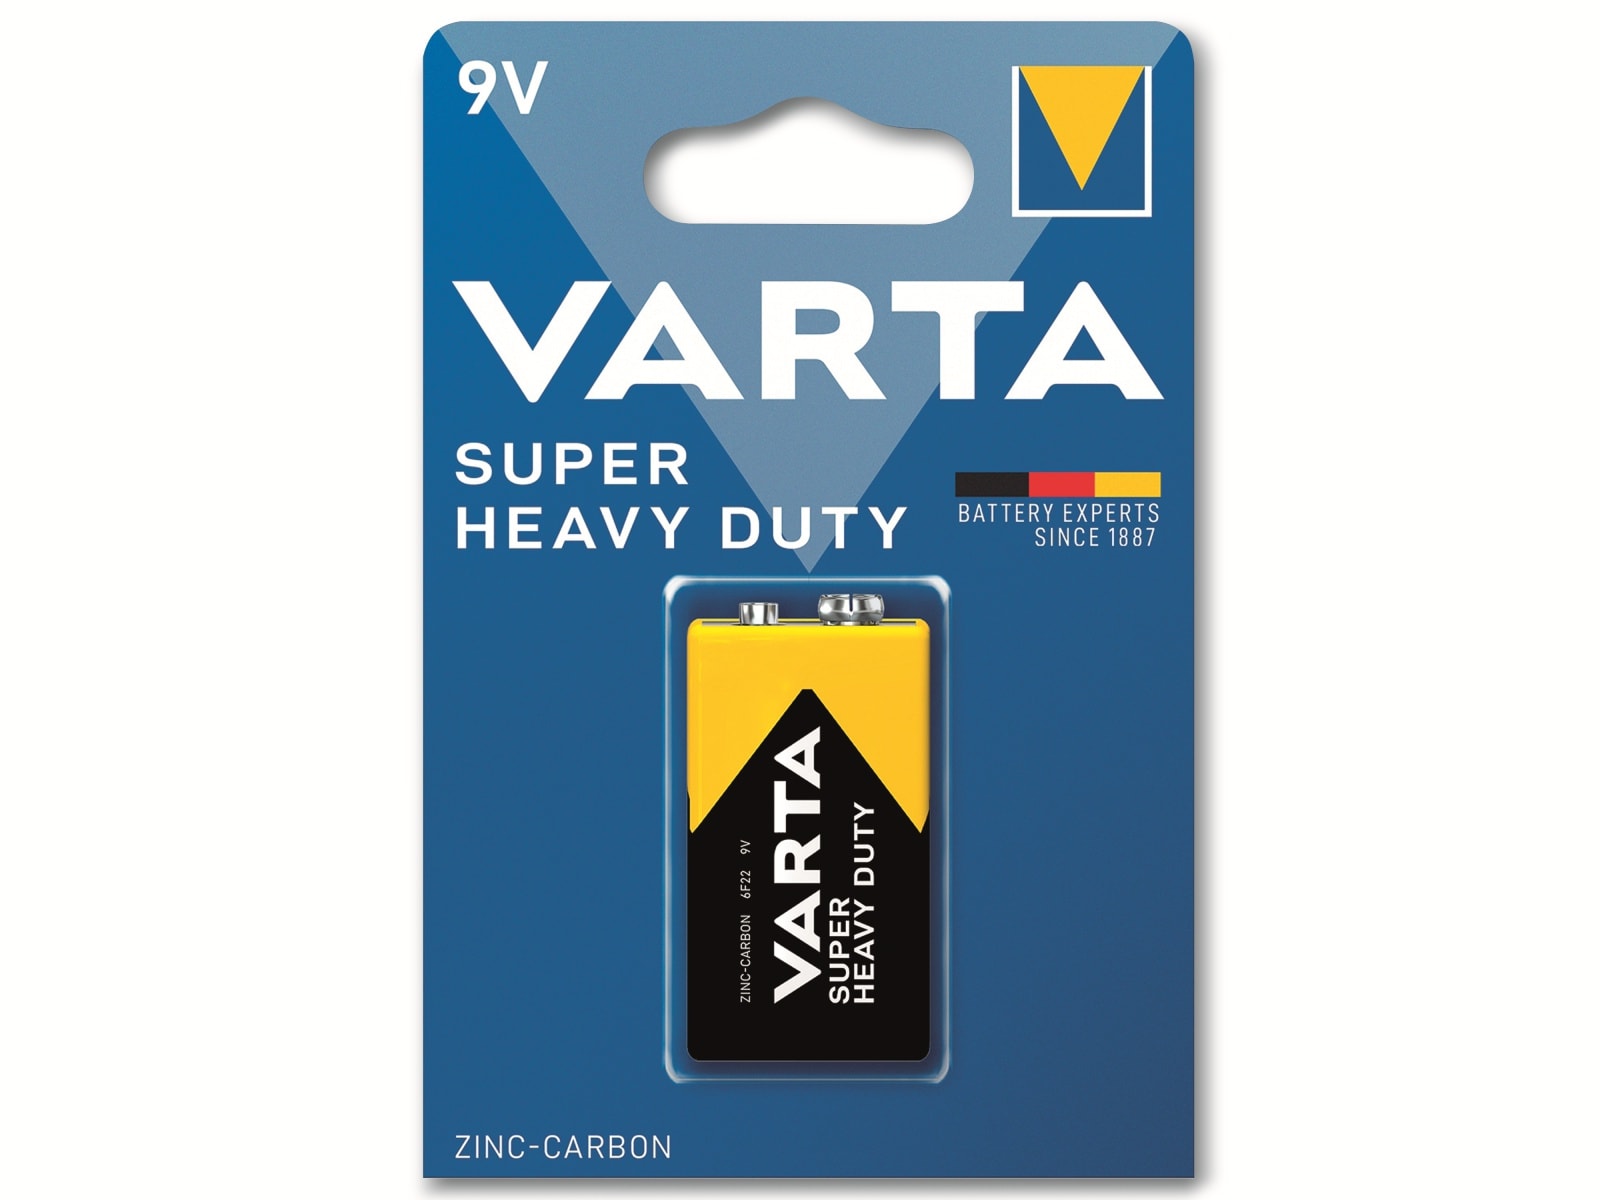 VARTA Batterie Zink-Kohle, E-Block, 6F22, 9V, Superlife, 1 Stück